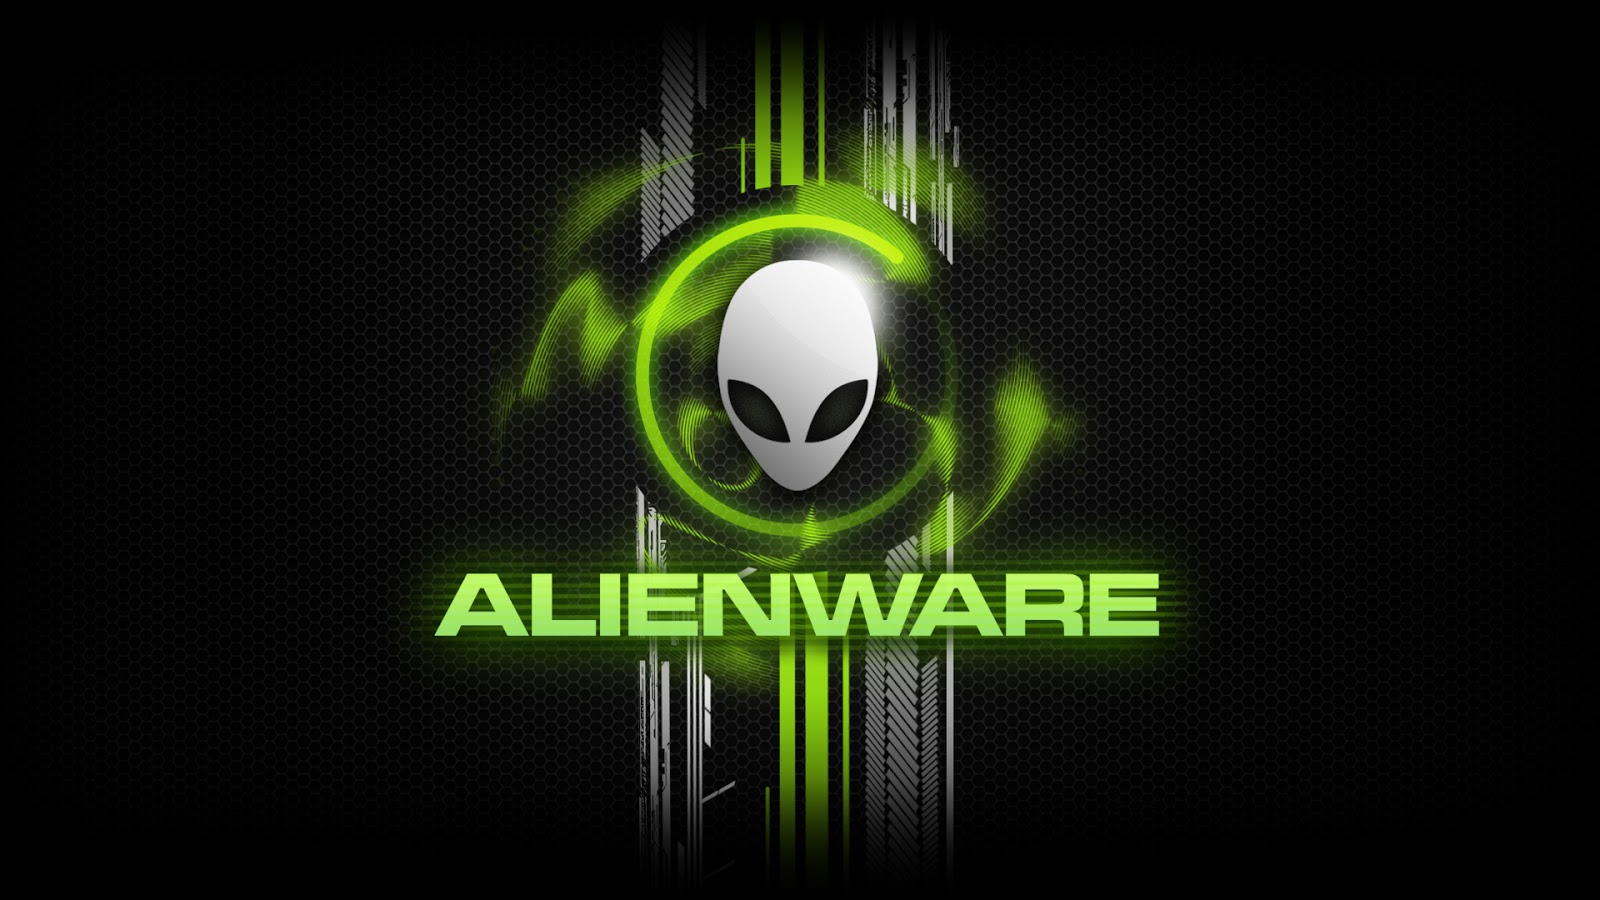 Alienware 2013 Wallpapers   Windows 8 HD Wallpaper 2013